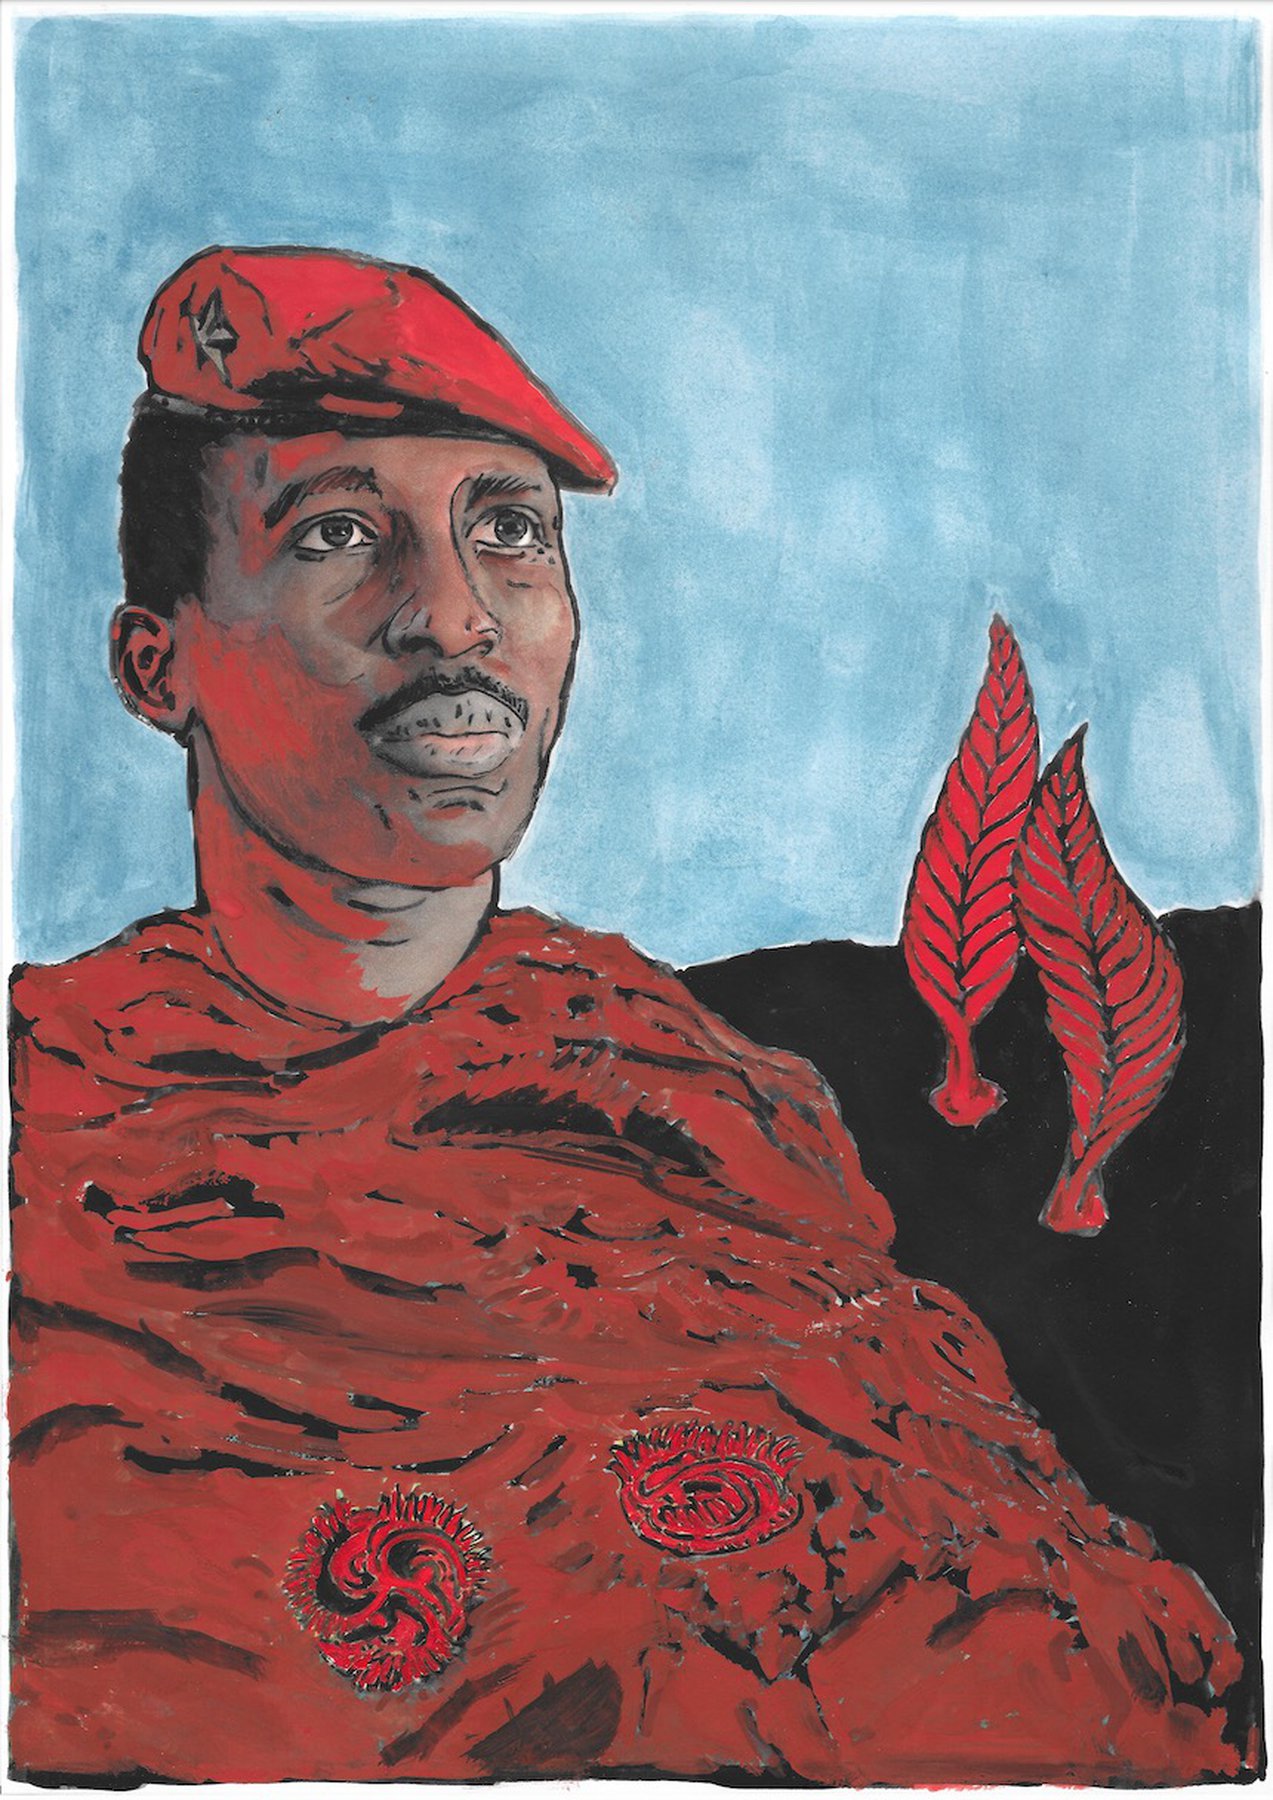 94 Million Years of Collectivism, Thomas Sankara(1949-1987) with rock, Tribrachidium and Charnia